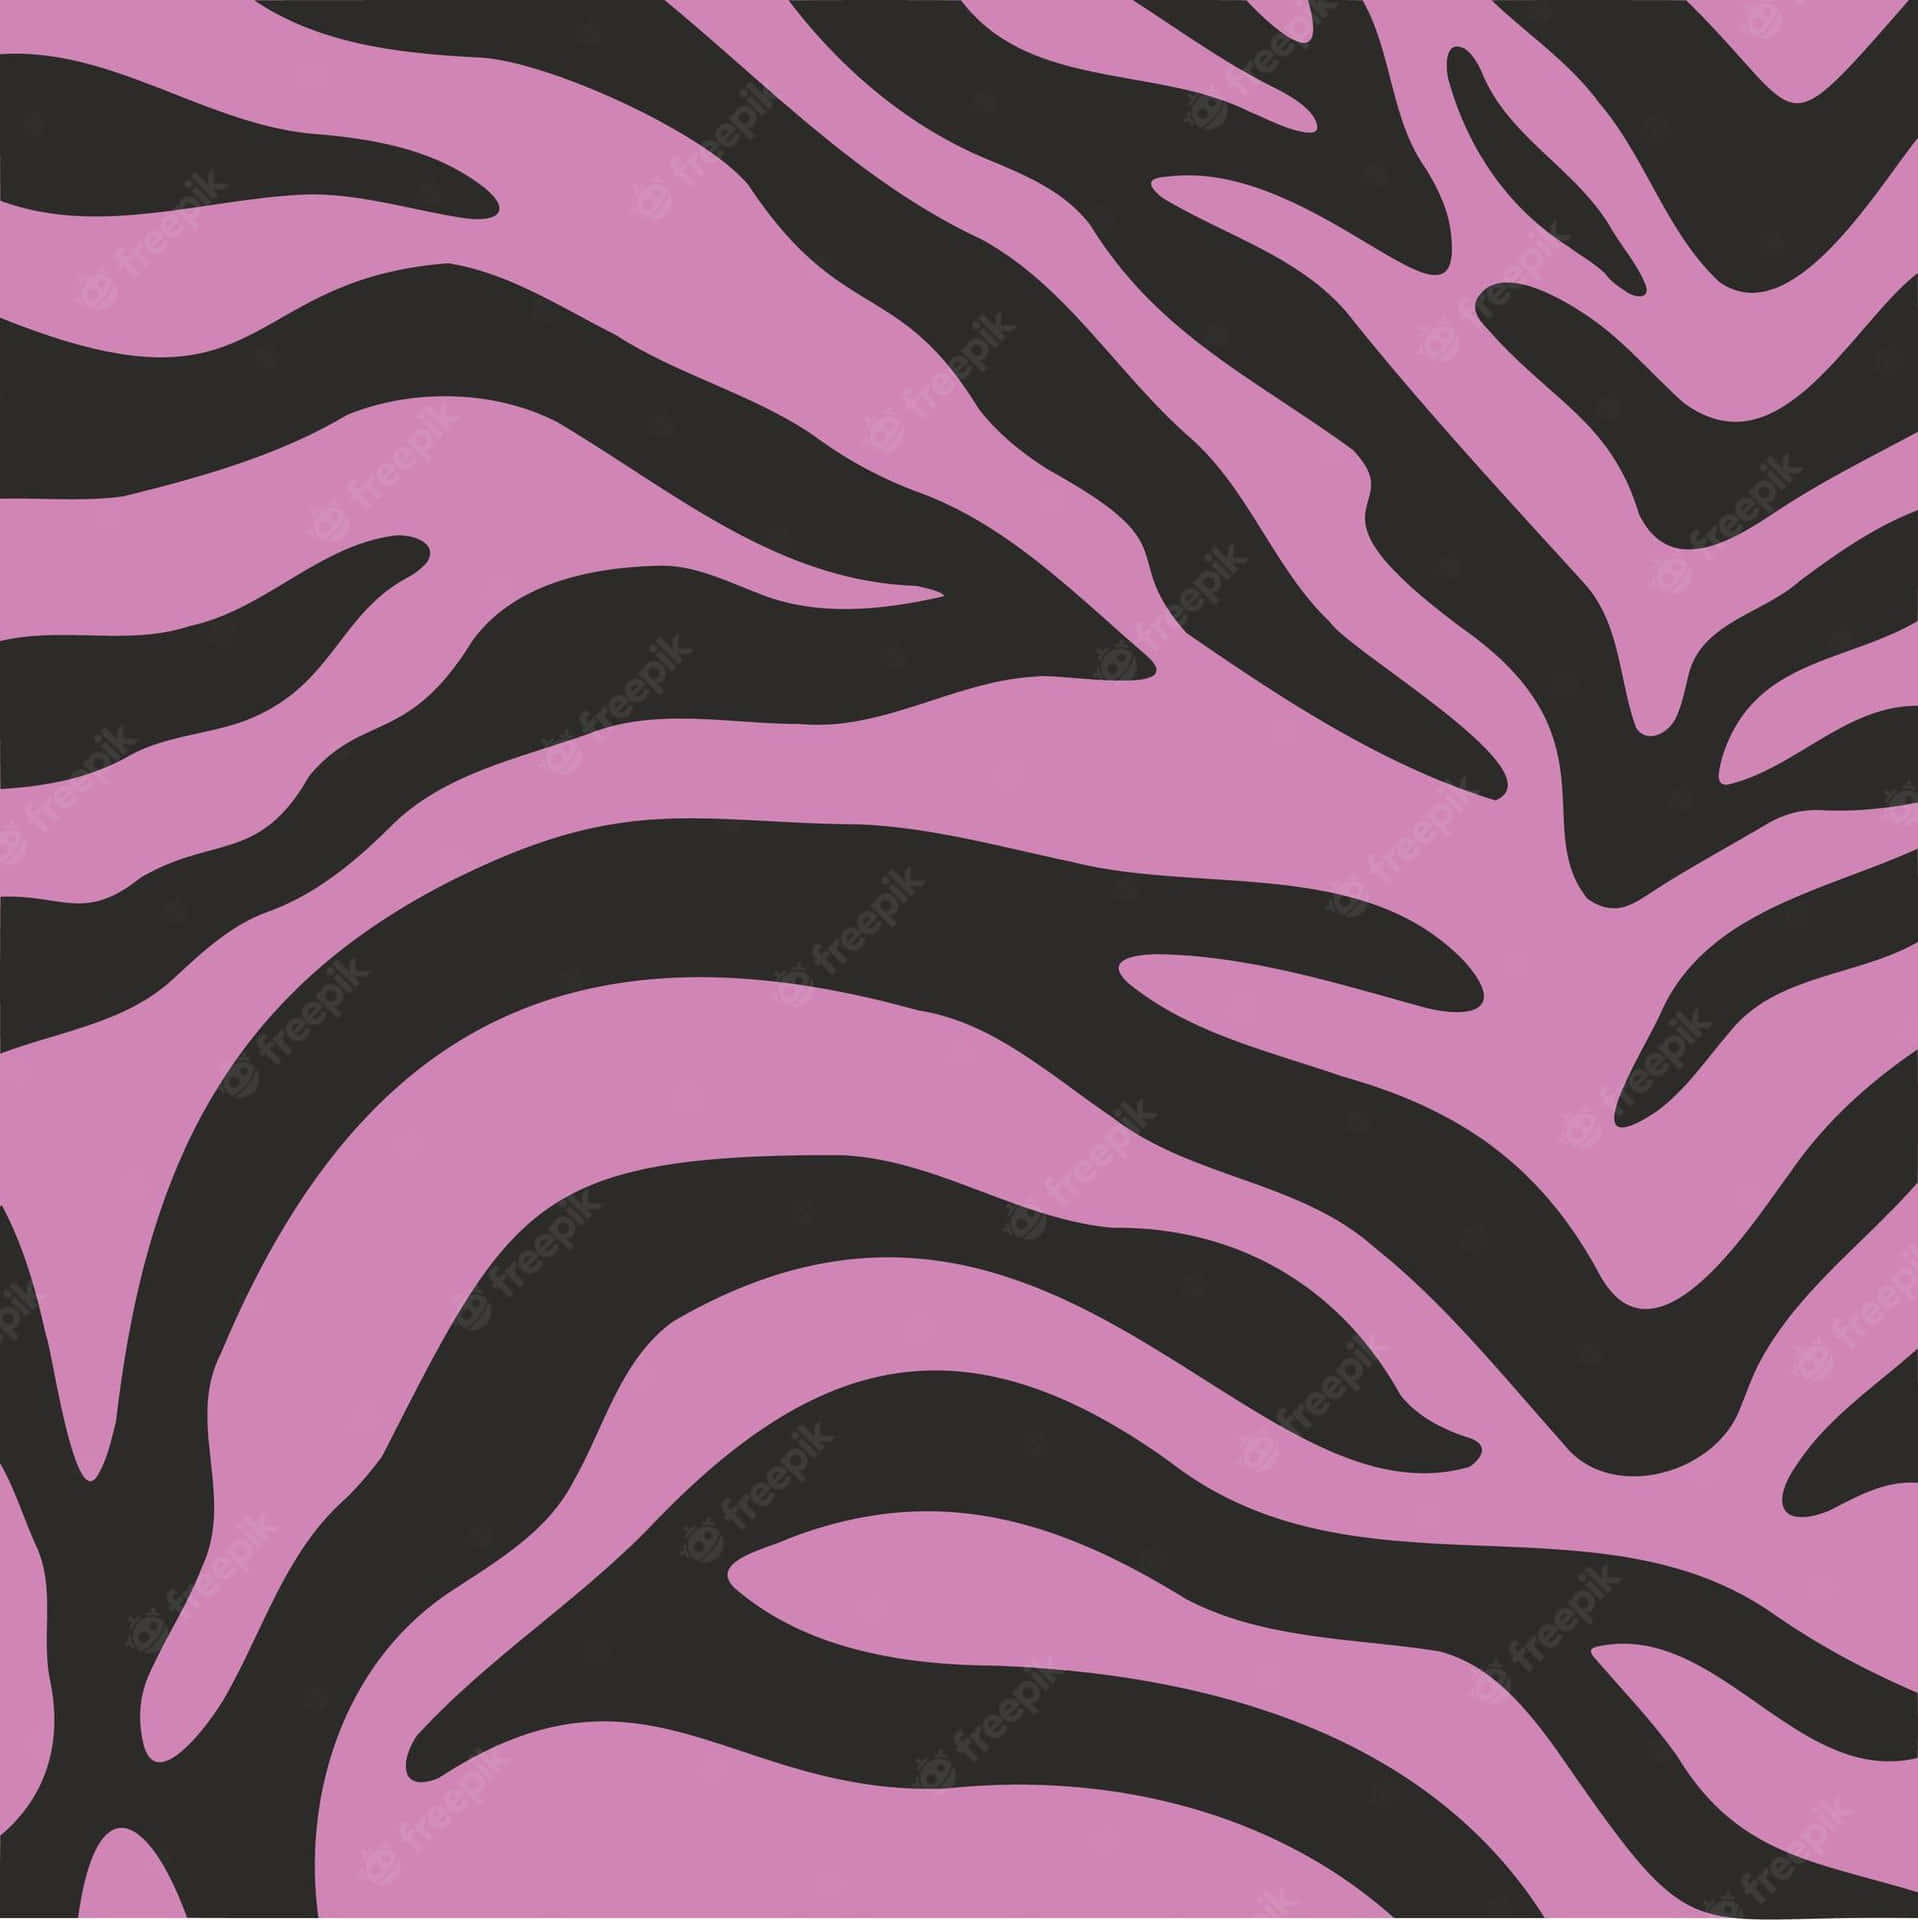 Audacee Bellissimo: Zebra Rosa Sfondo